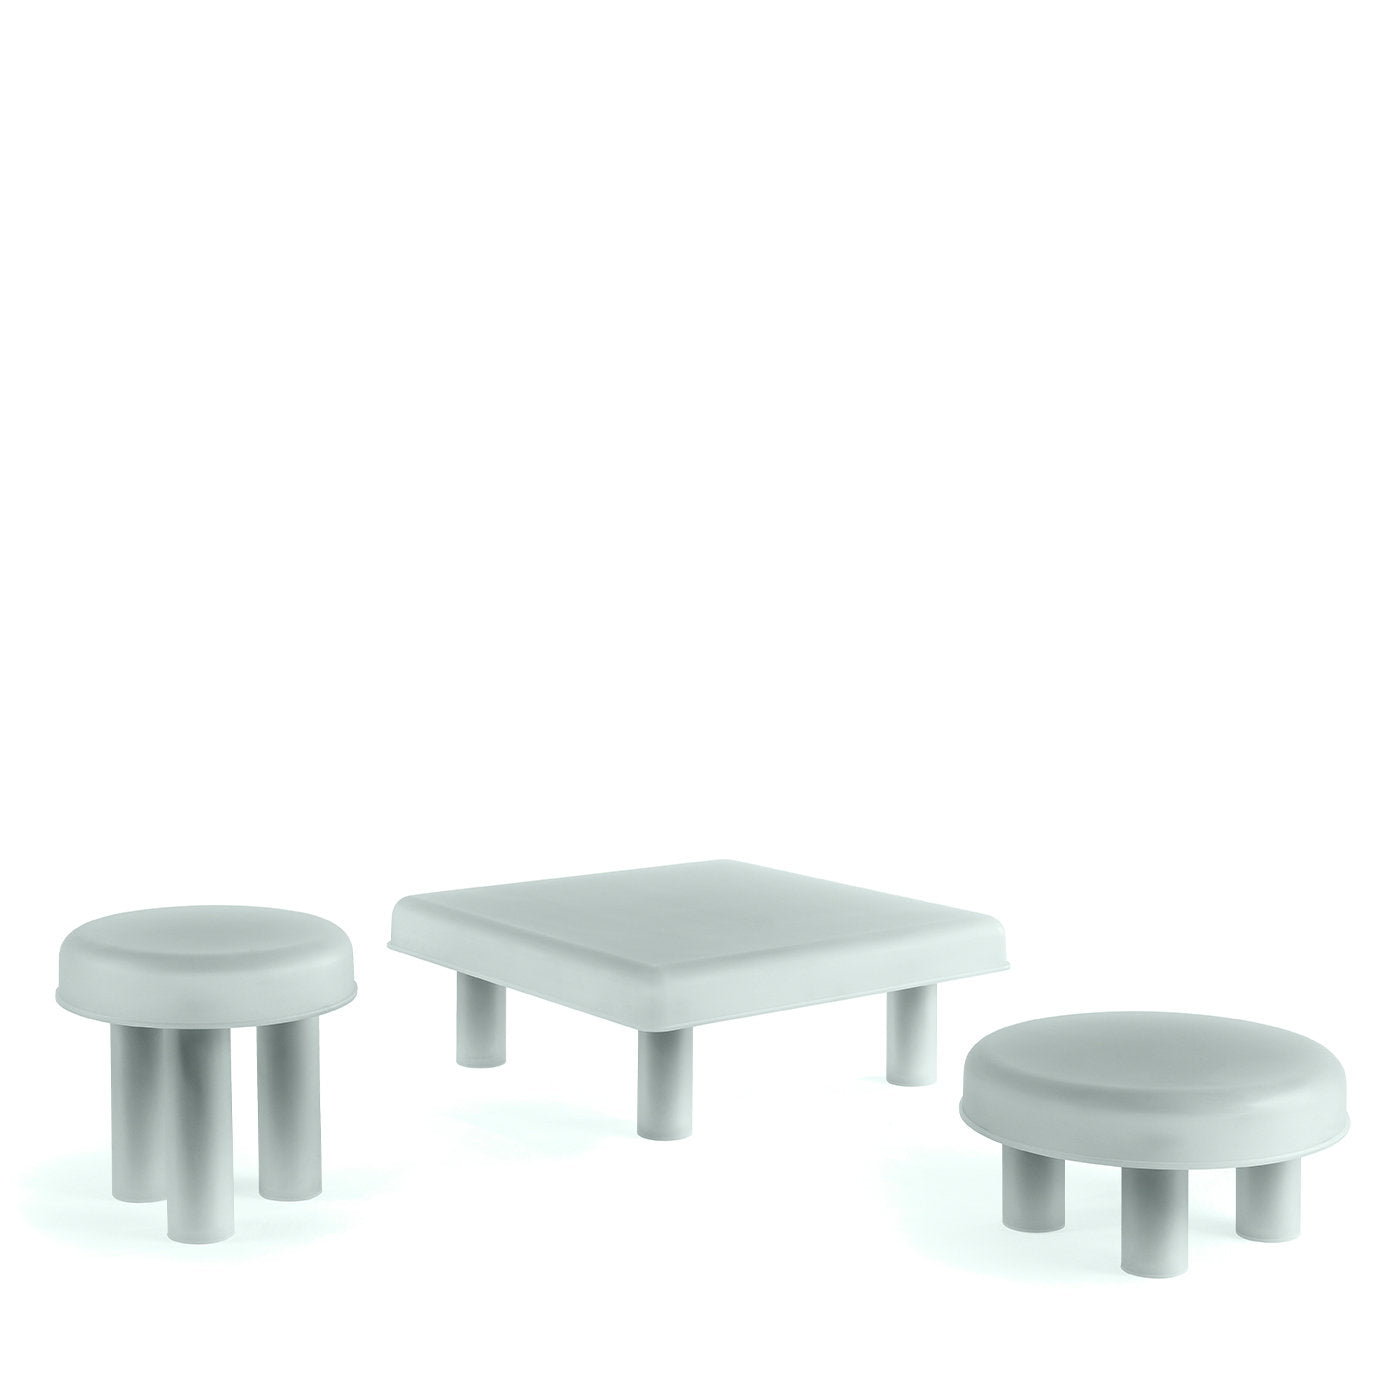 SOPOVRIA SO TABLE CENTRAL - Design by Sovrappensiero - Vista alternativa 1